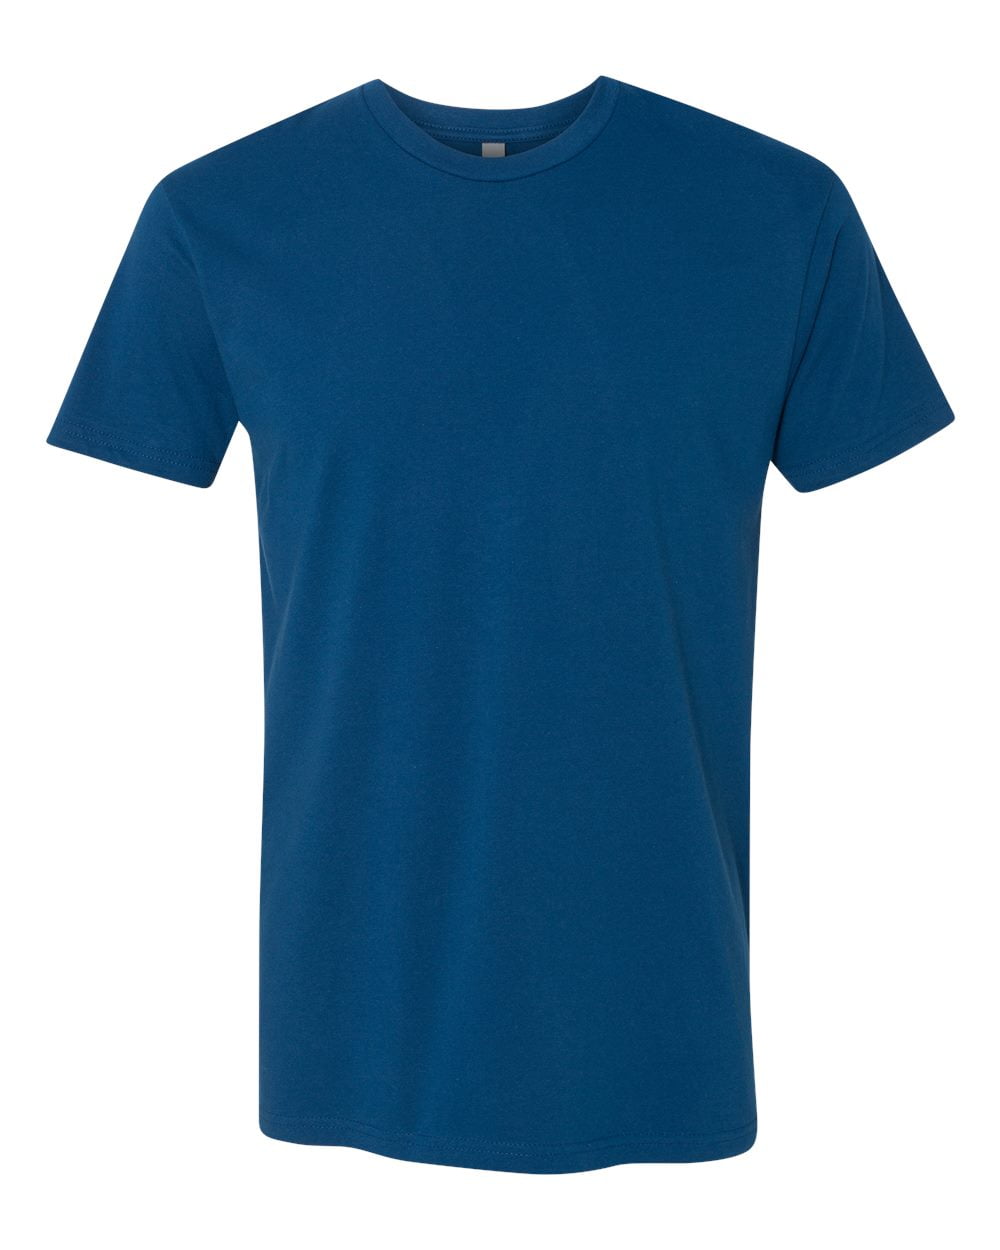 Next Level Apparel - Unisex Cotton T-Shirt - COOL BLUE - M - Walmart ...